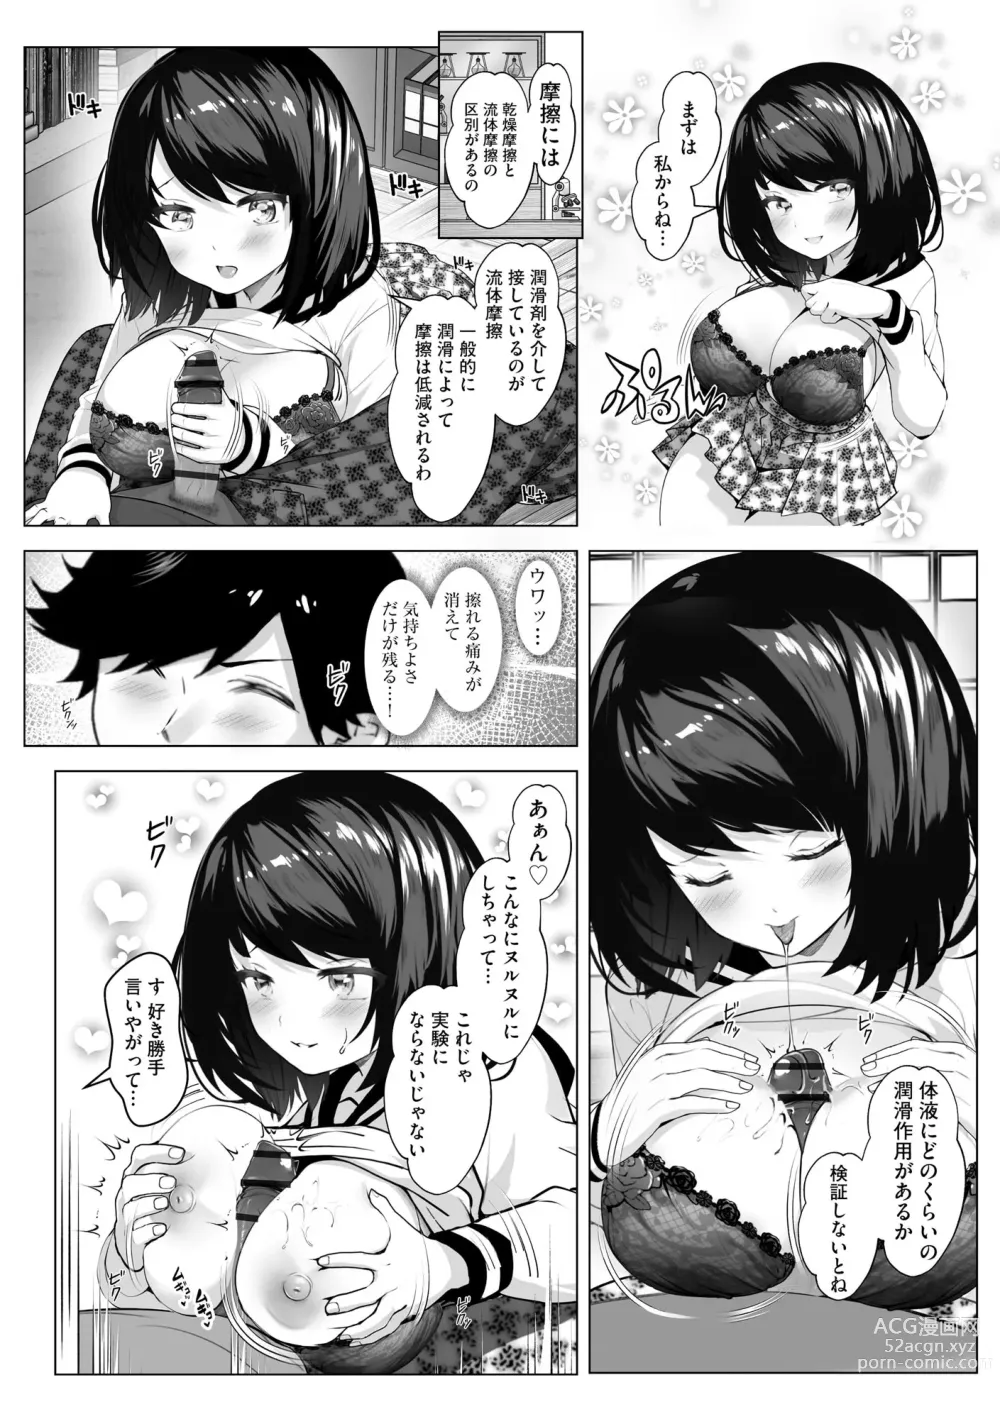 Page 374 of manga Cyberia Plus Vol. 15